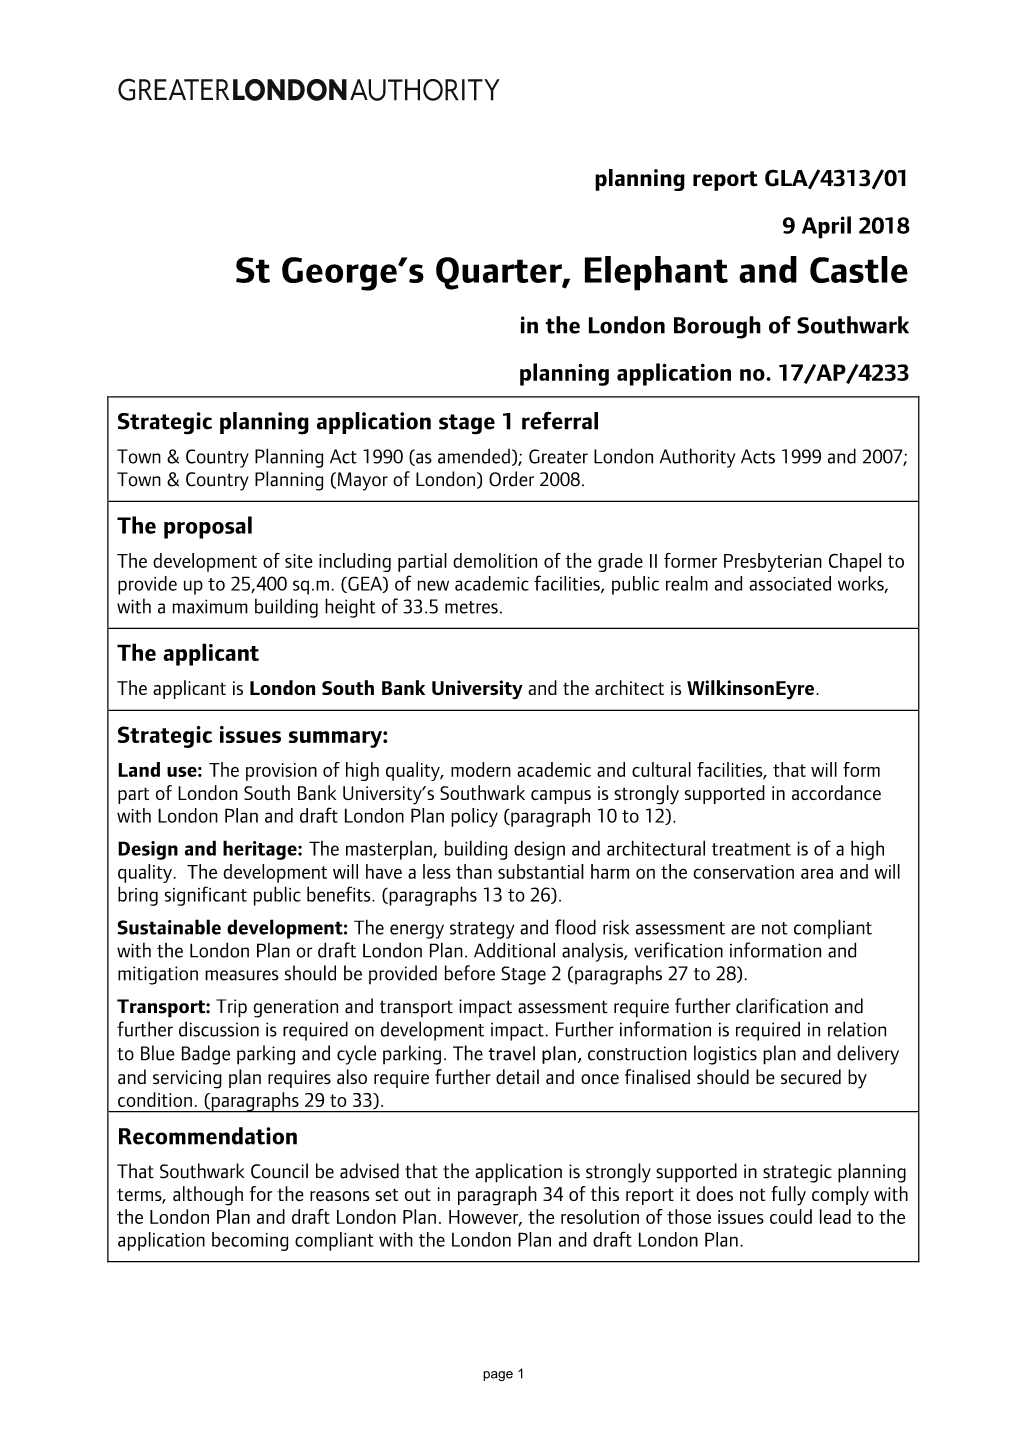 St George's Quarter, Elephant and Castle